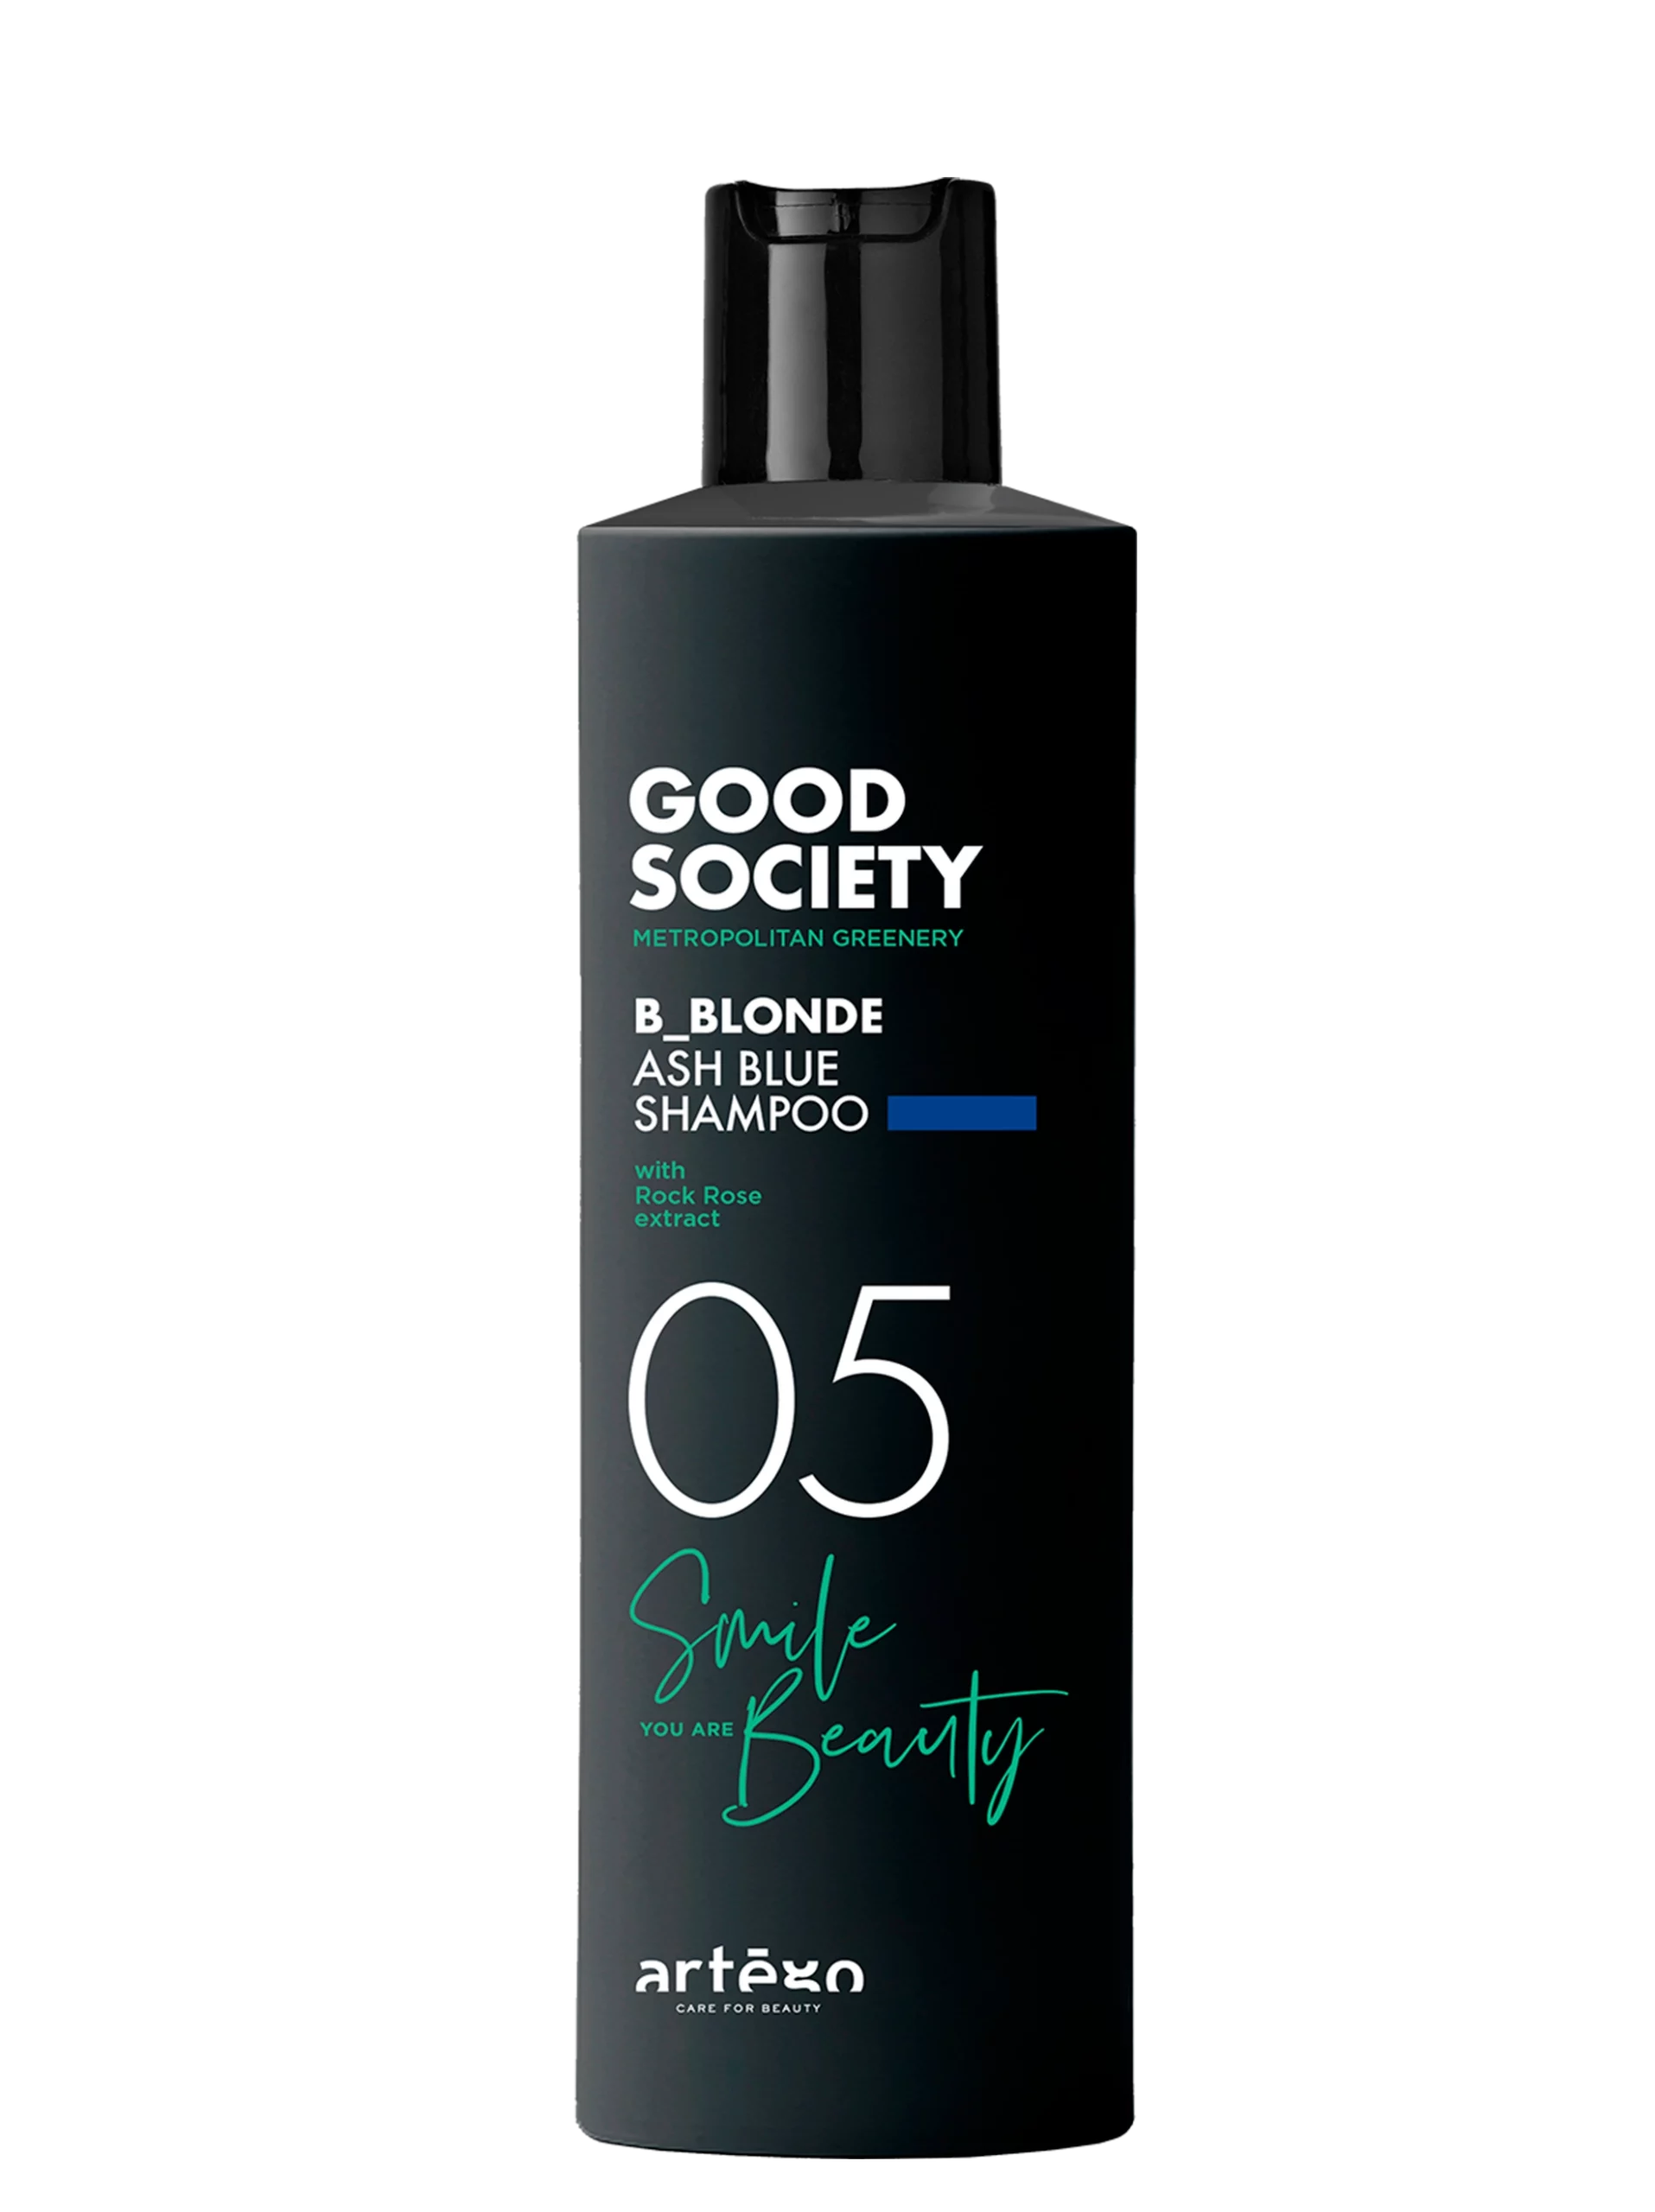 05-Good-Society-Ash-Blue-Shampoo-250ml